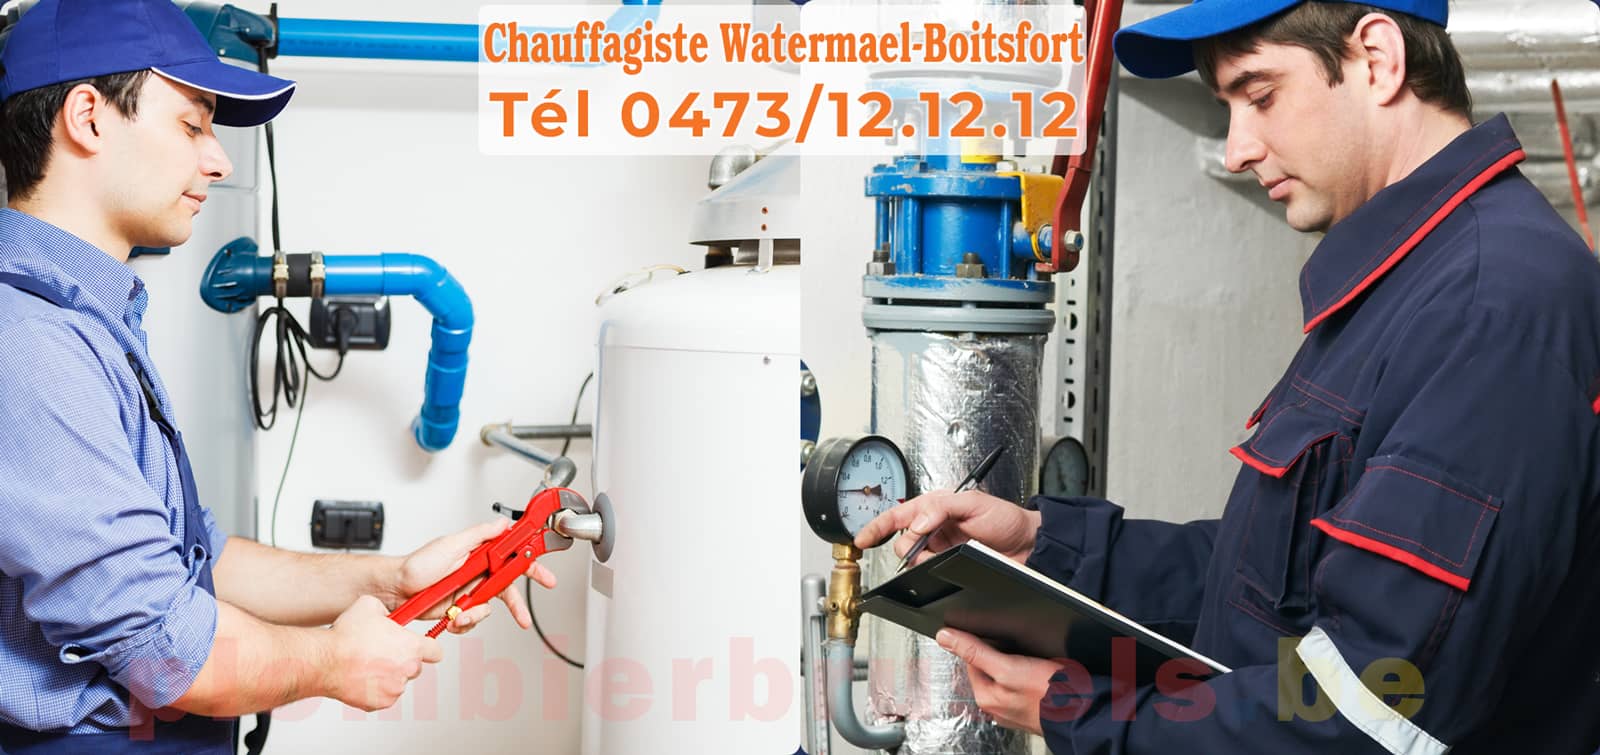 Chauffagiste Watermael-Boitsfort service de Chauffage tél 0473/12.12.12